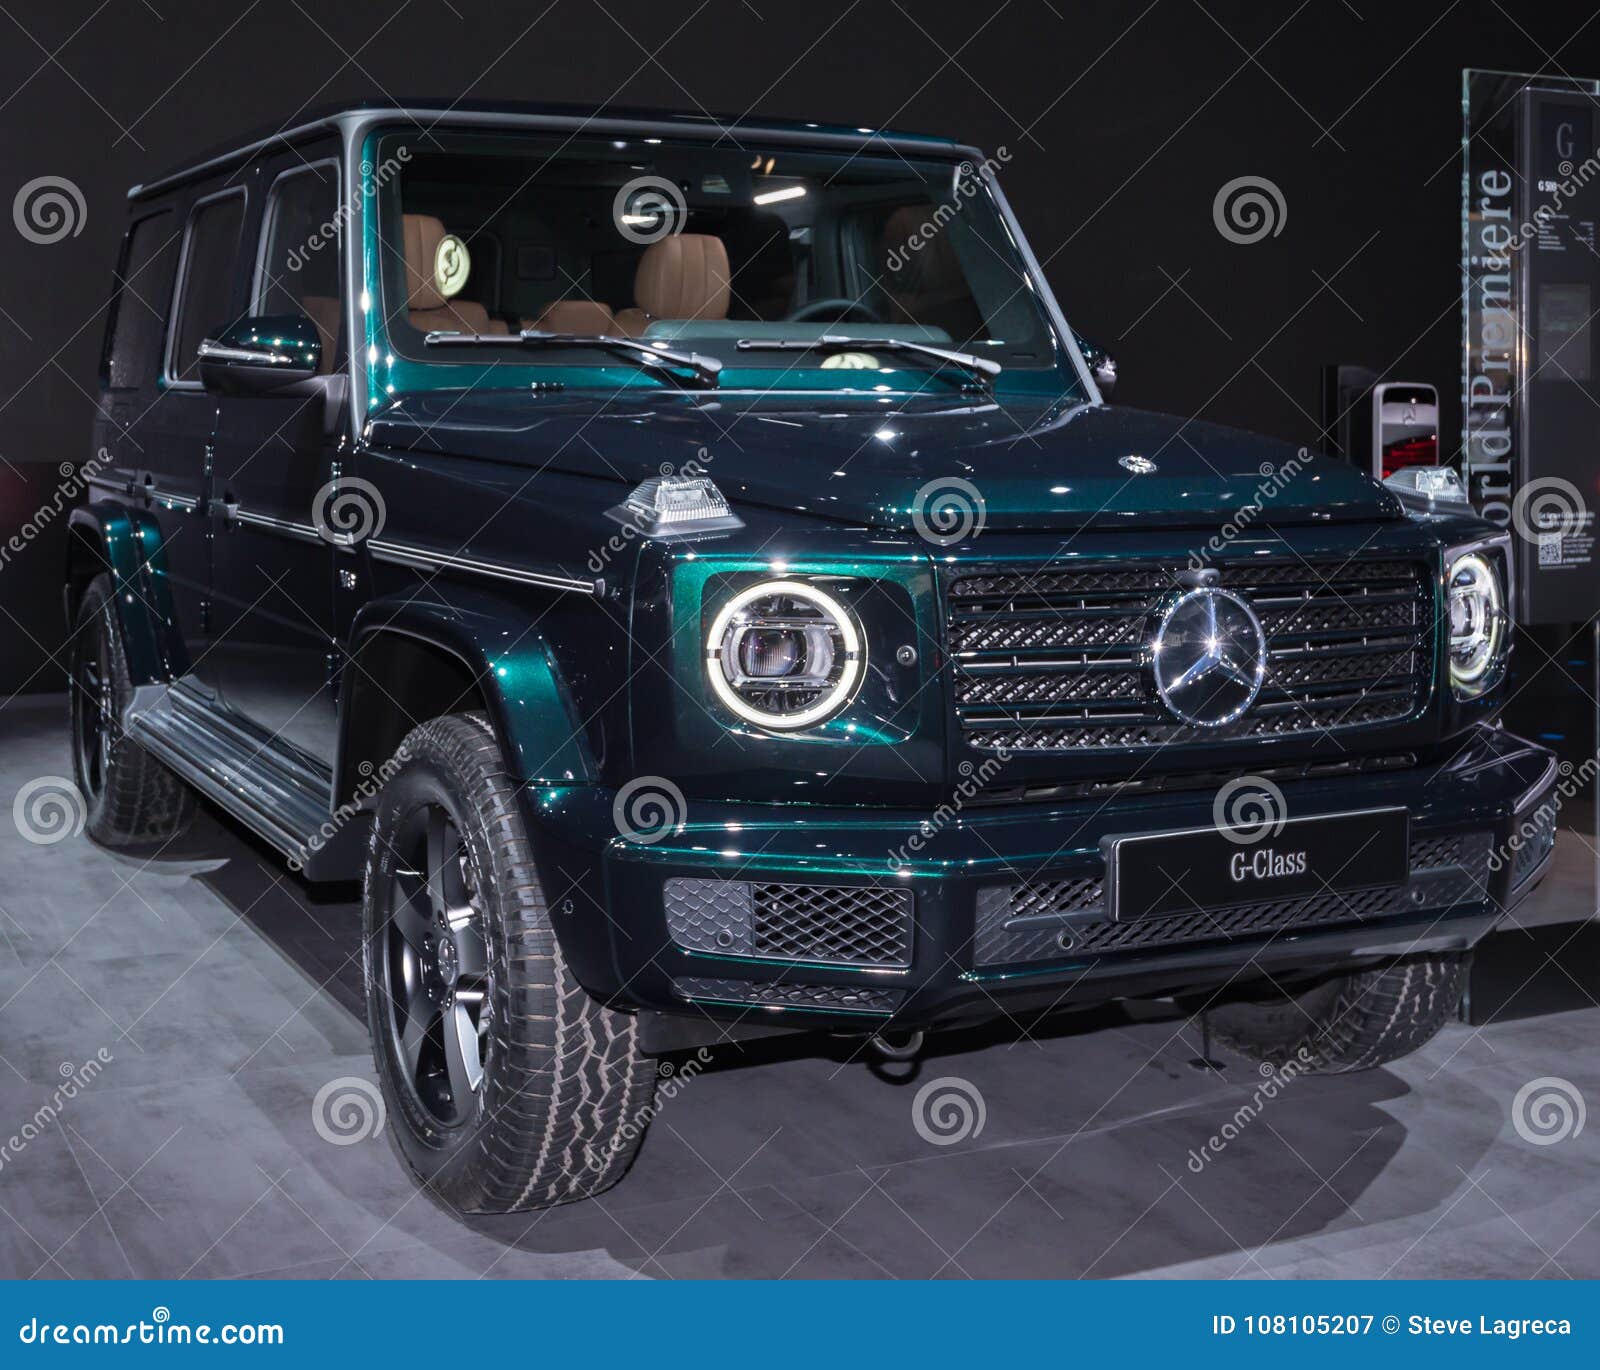 2019 Mercedes G Class Suv Naias Editorial Photography Image Of Benz Prestigious 108105207